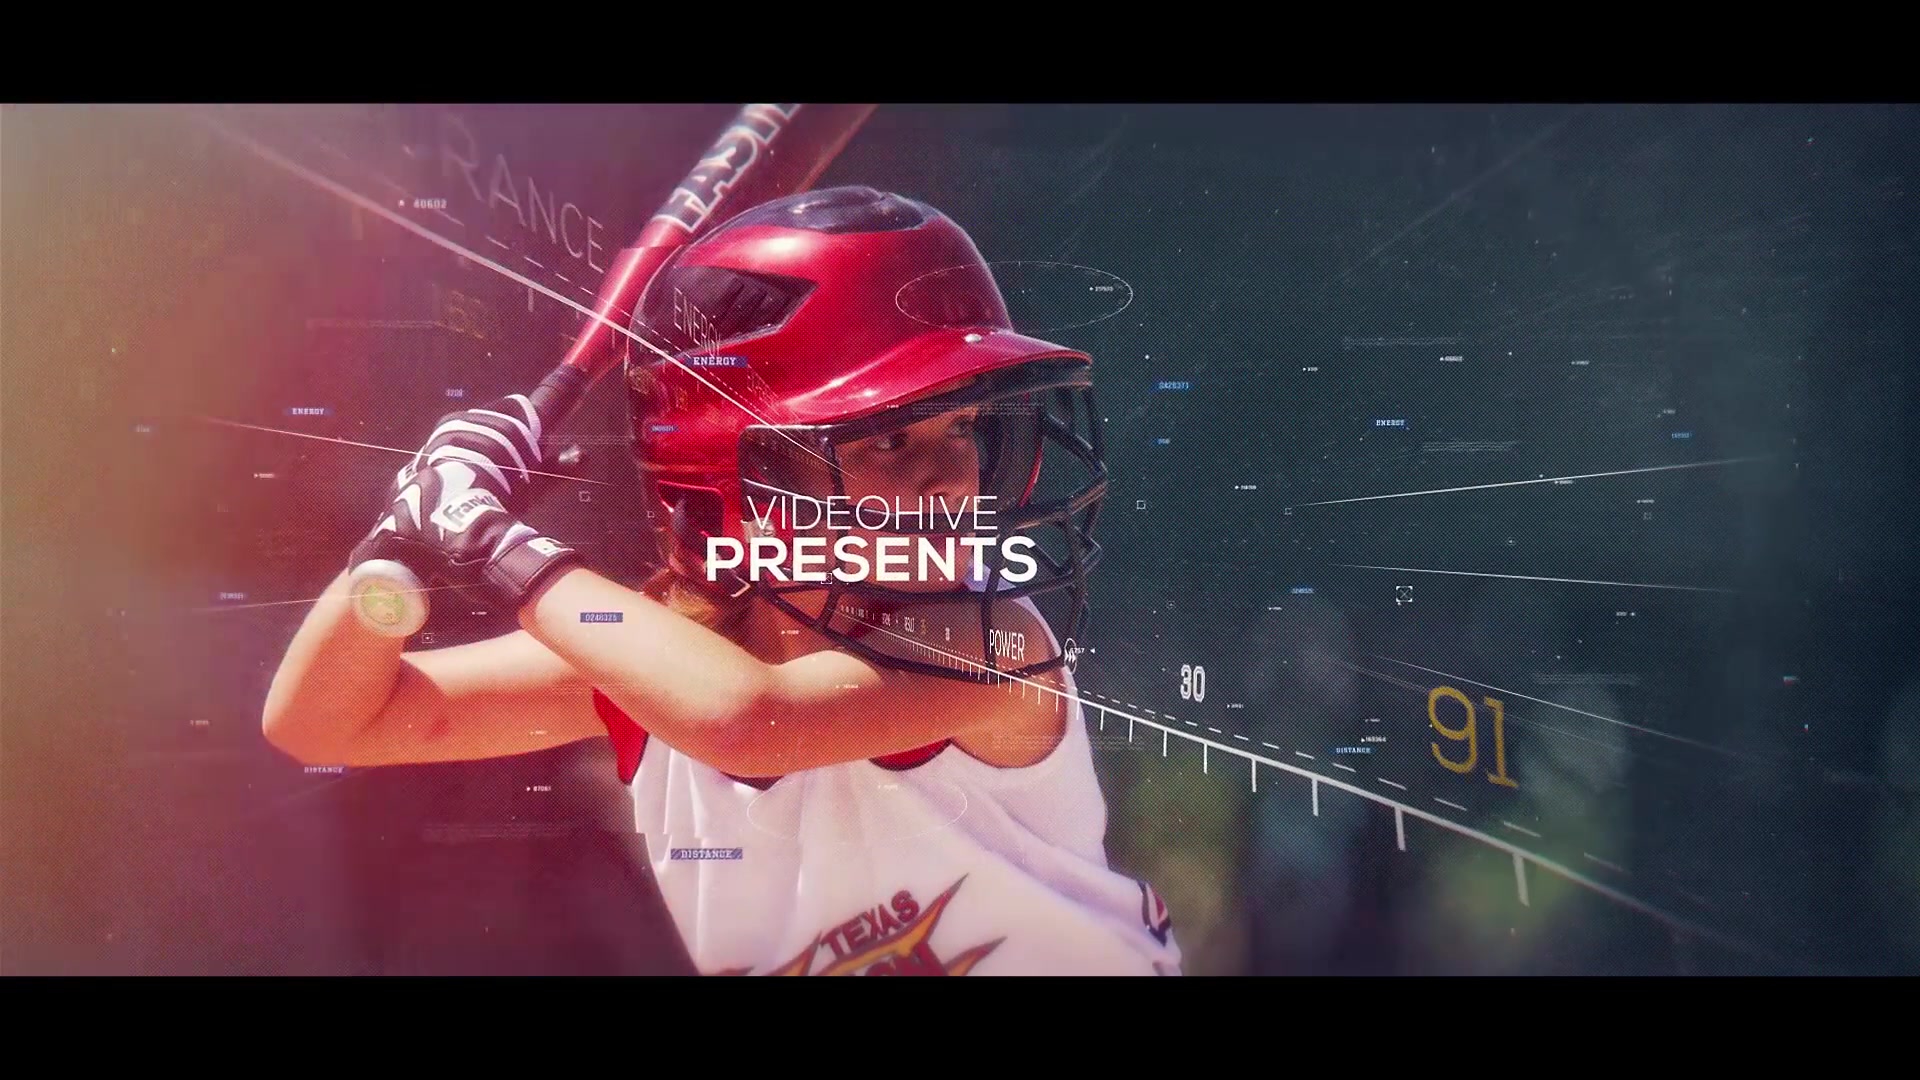 Sport Parallax Slideshow - Download Videohive 20257930